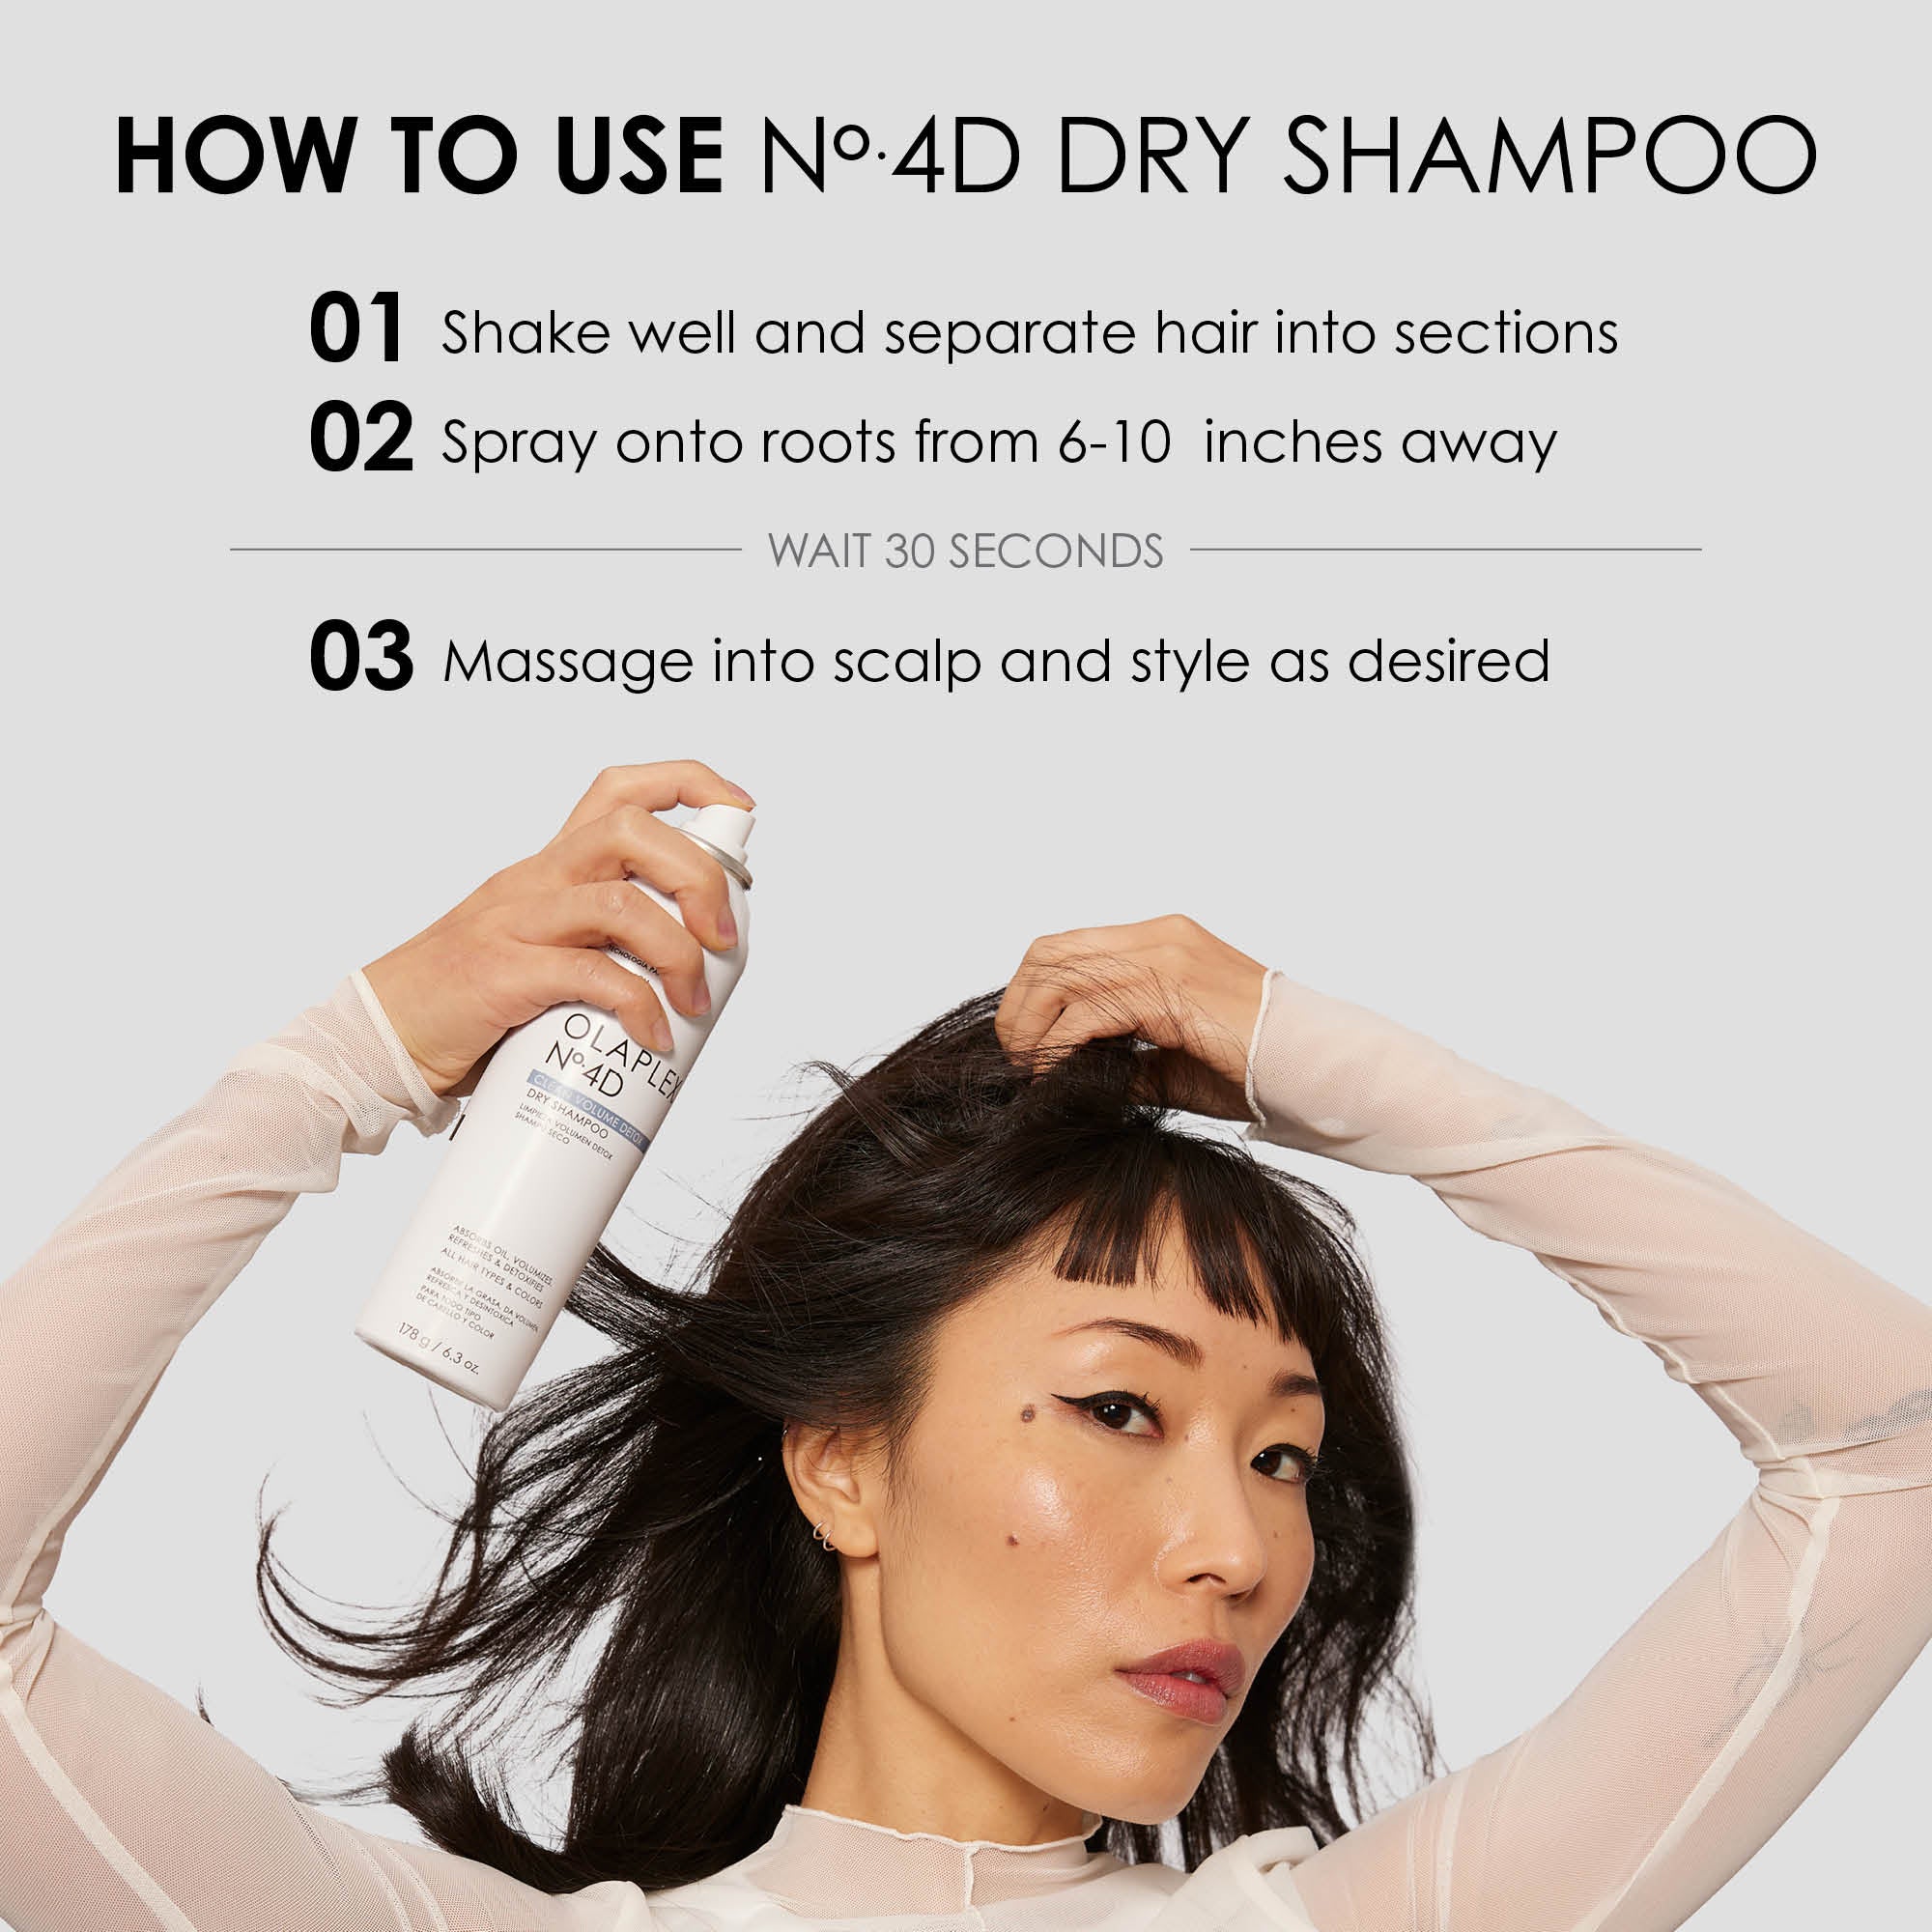 PREORDEN Olaplex - No.4D Clean Volume Detox Dry Shampoo